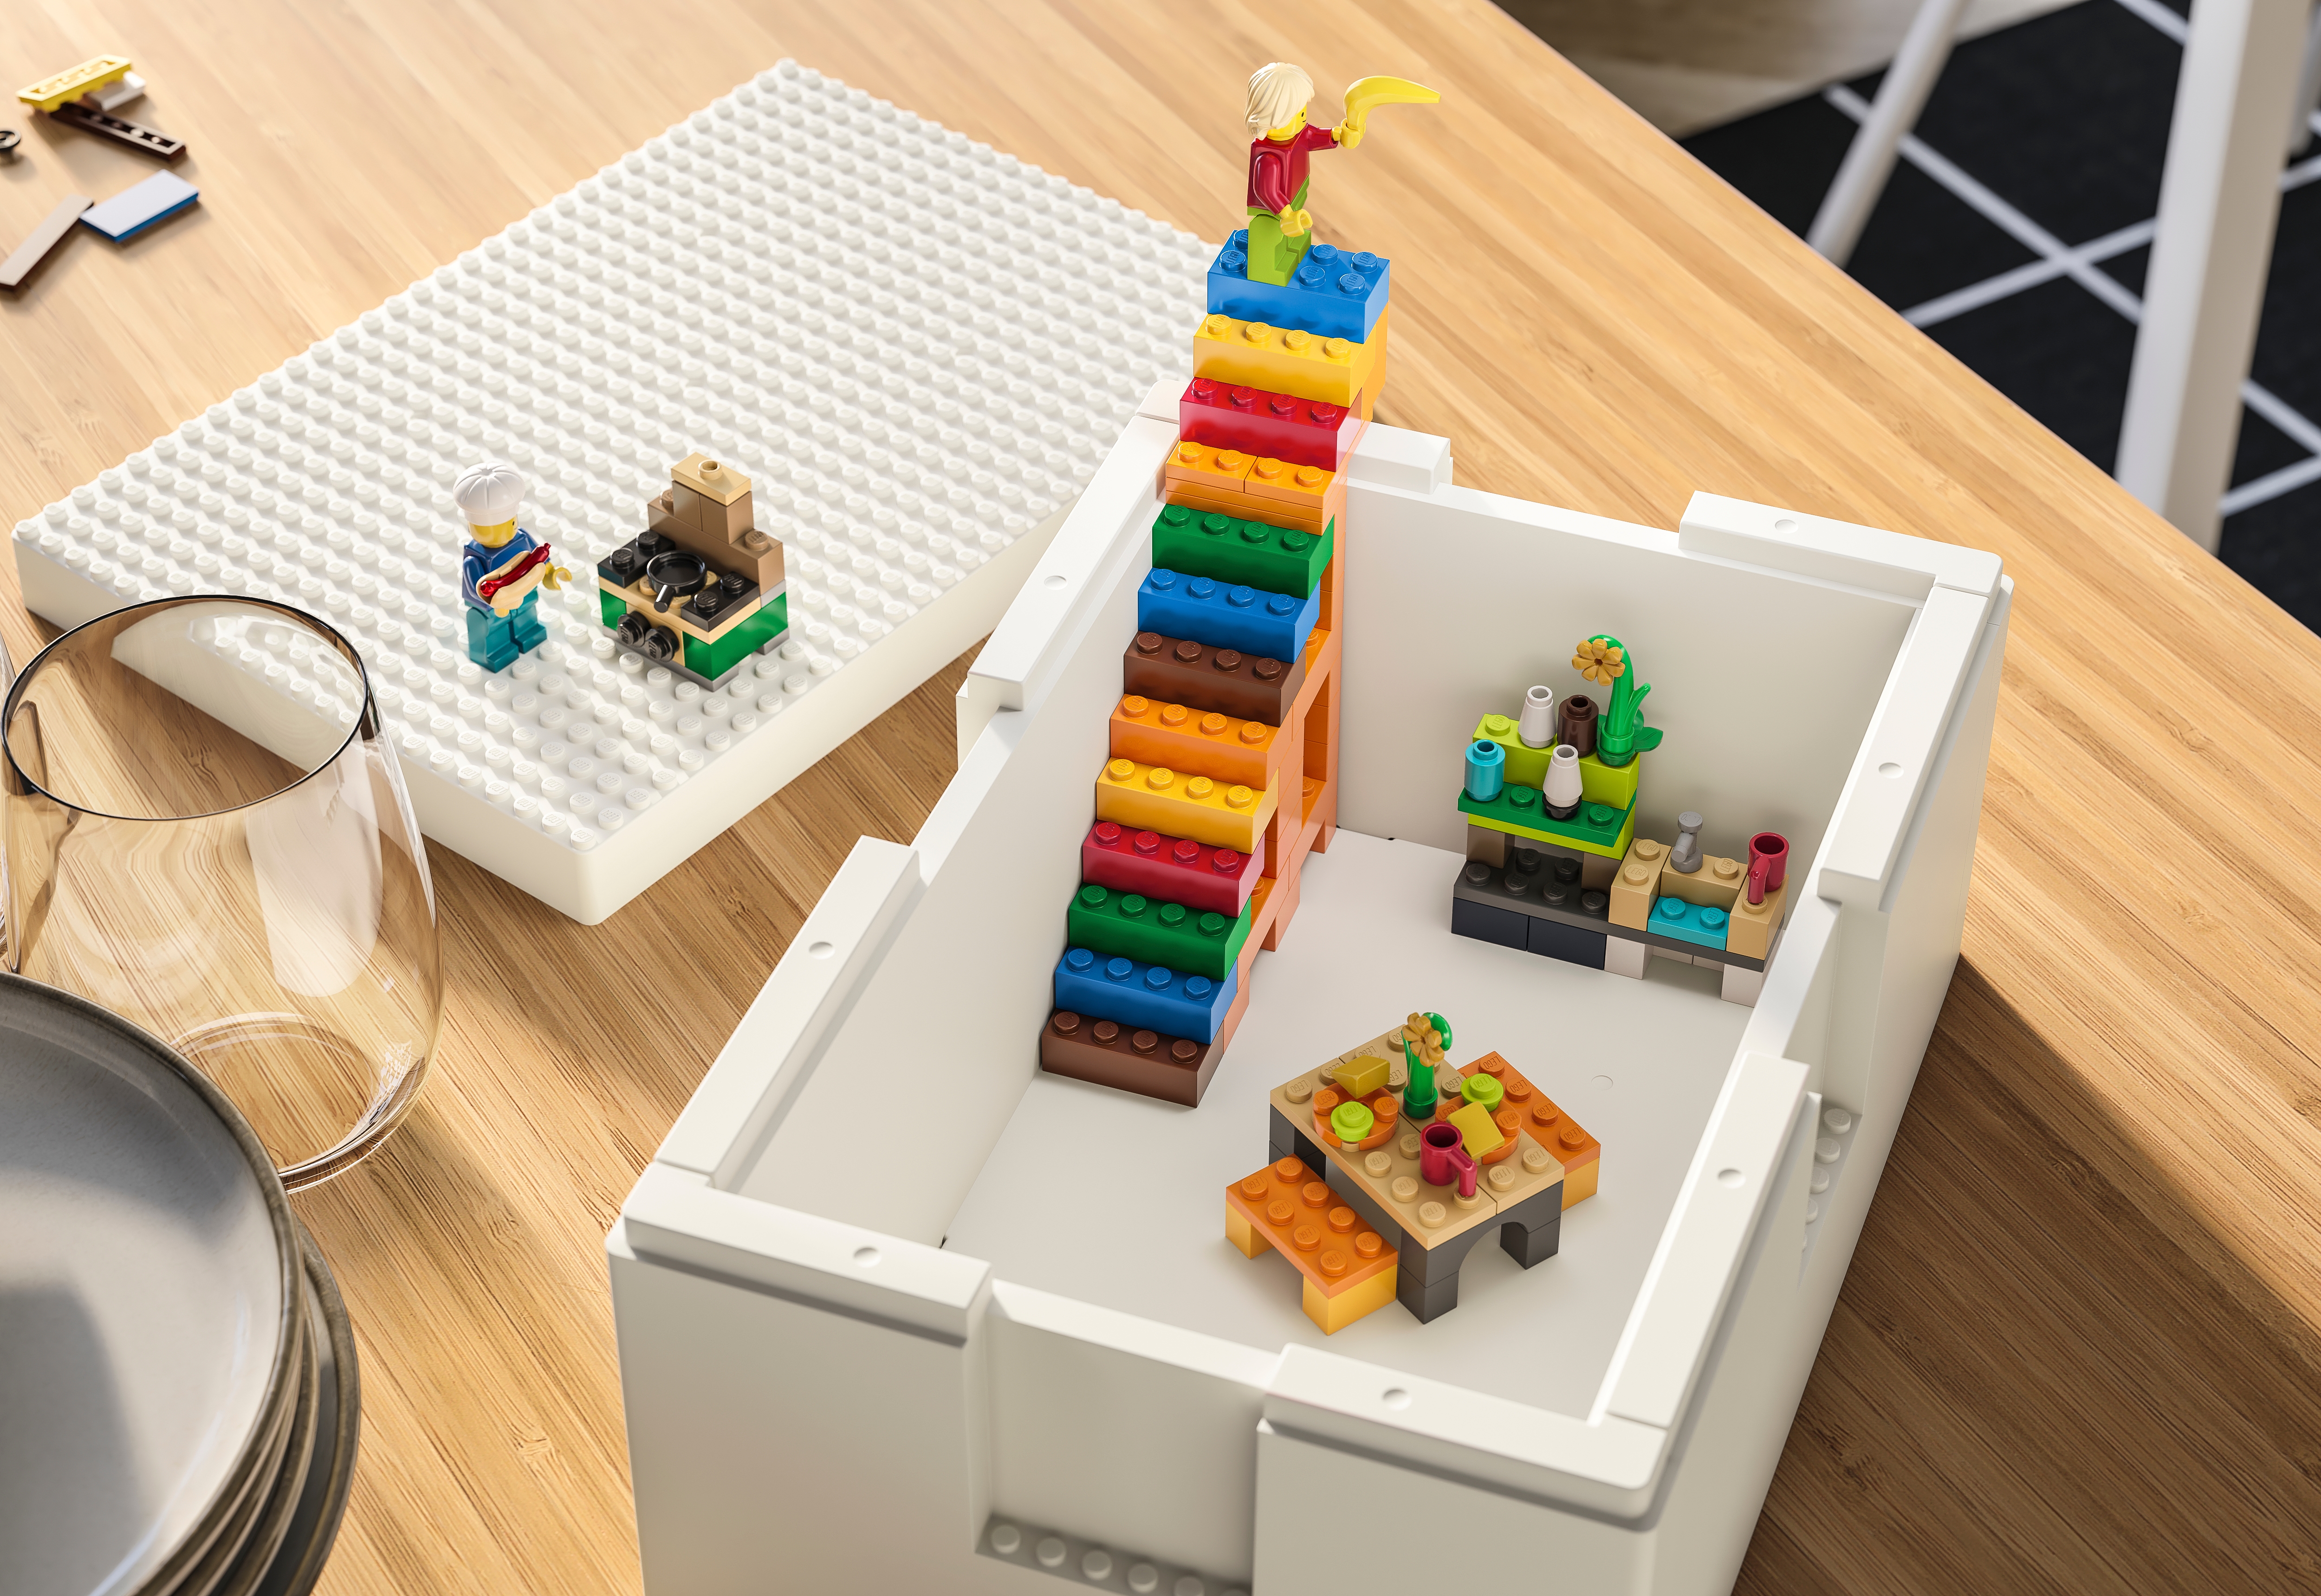 BYGGLEK LEGO® box with lid, set of 3, white - IKEA